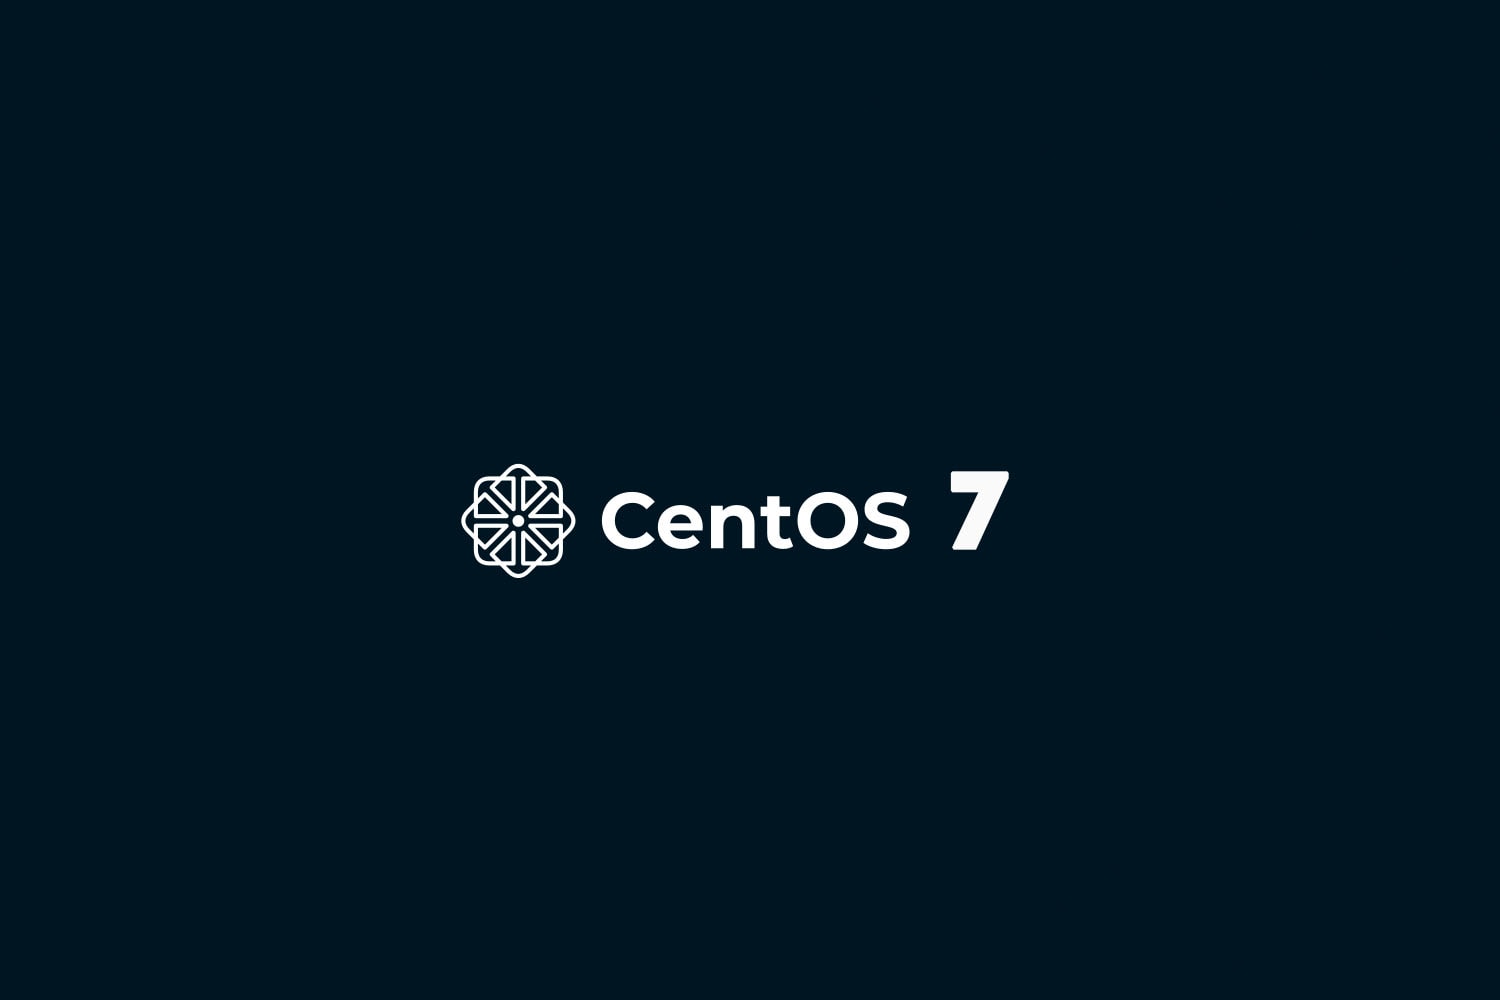 Download Centos 7